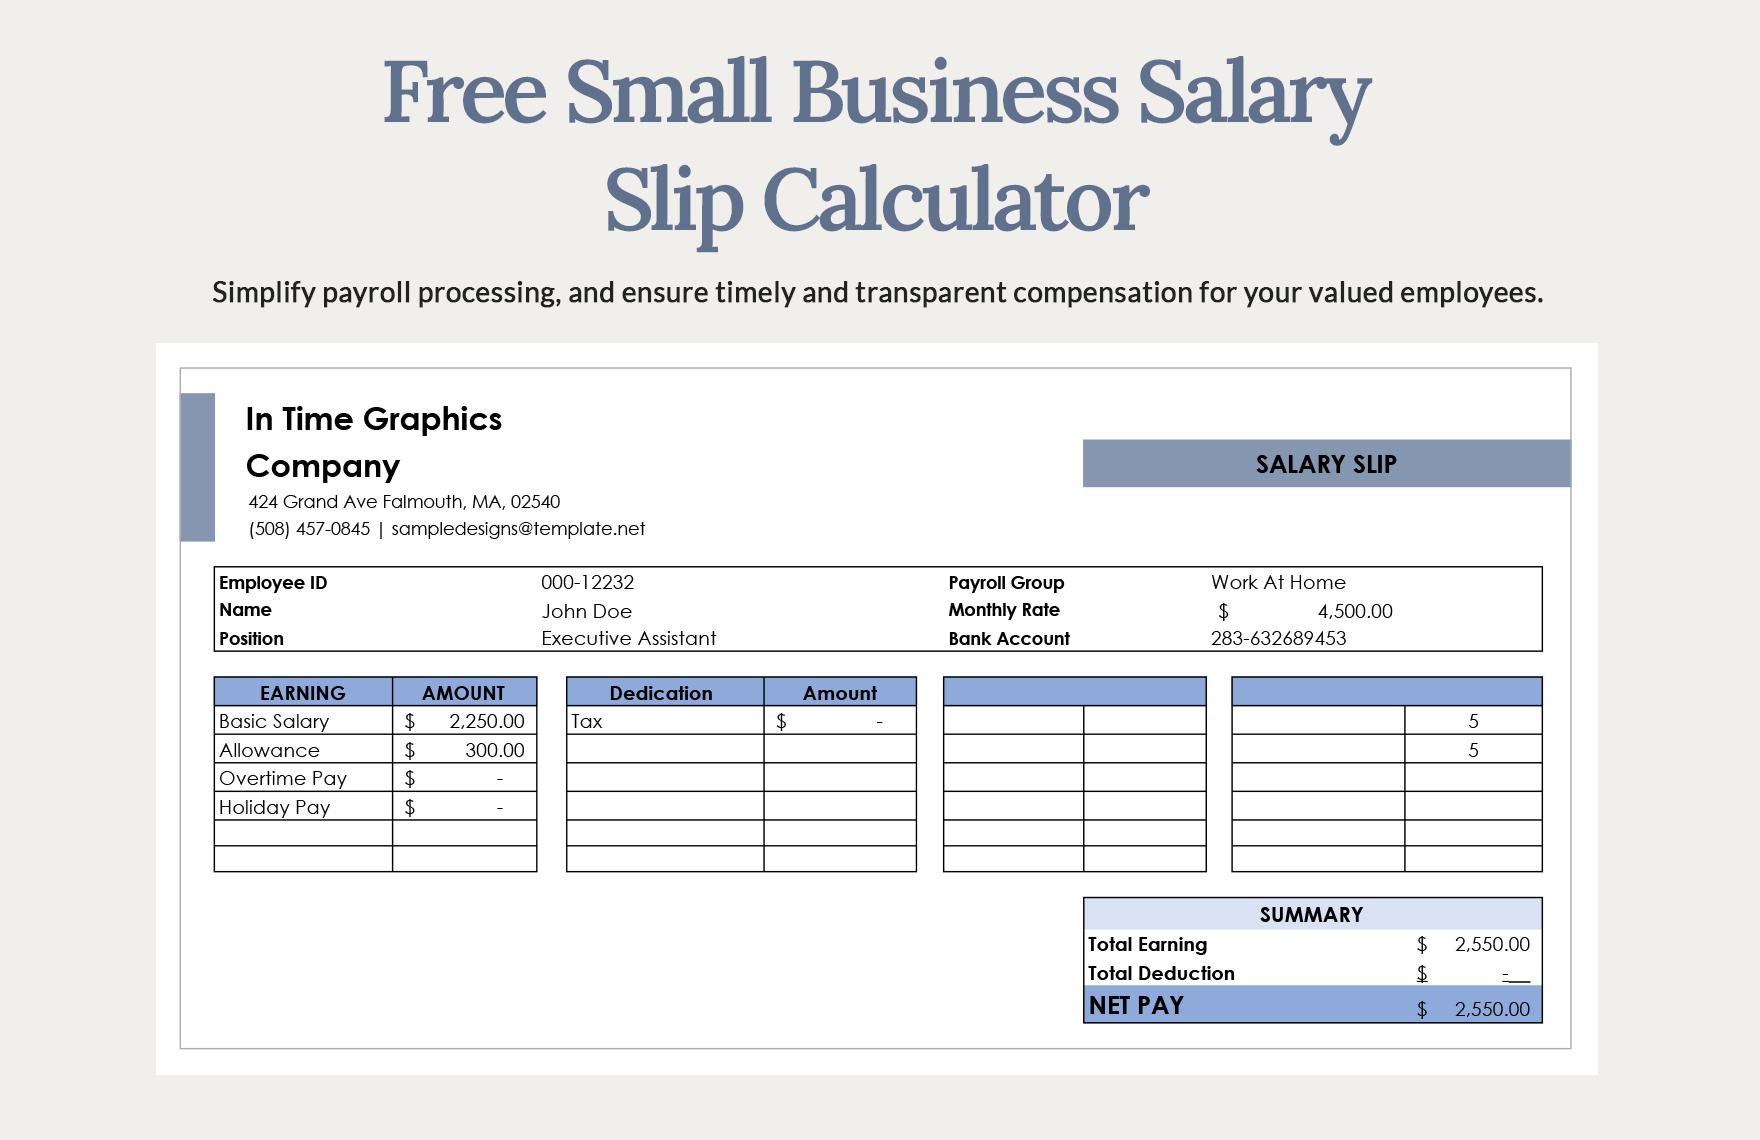 Small Business Salary Slip Calculator